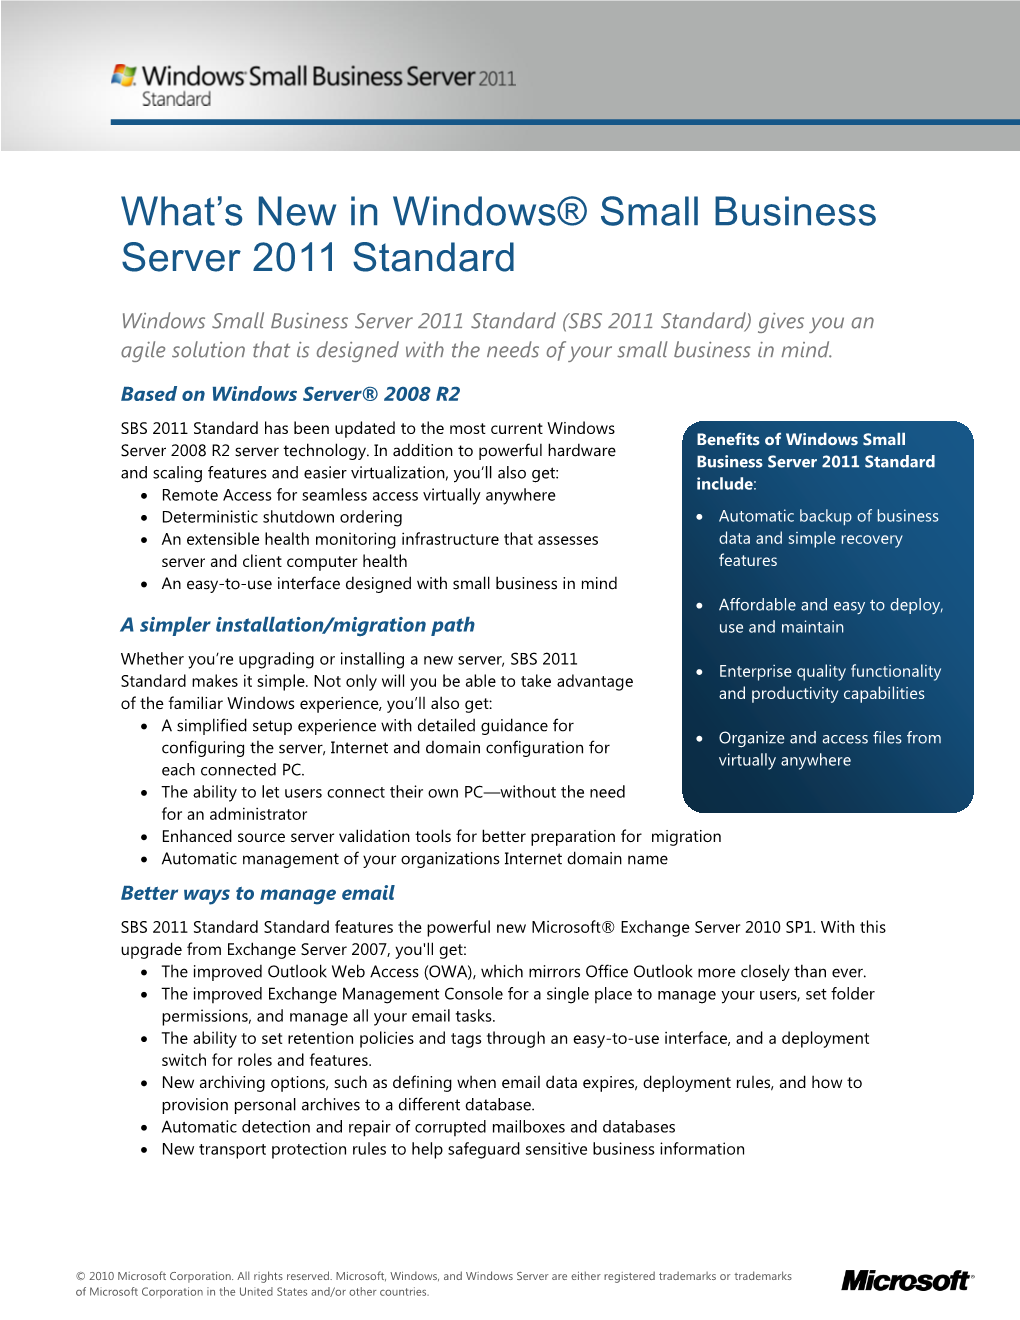 Windows Home Server to Partner Sales Card